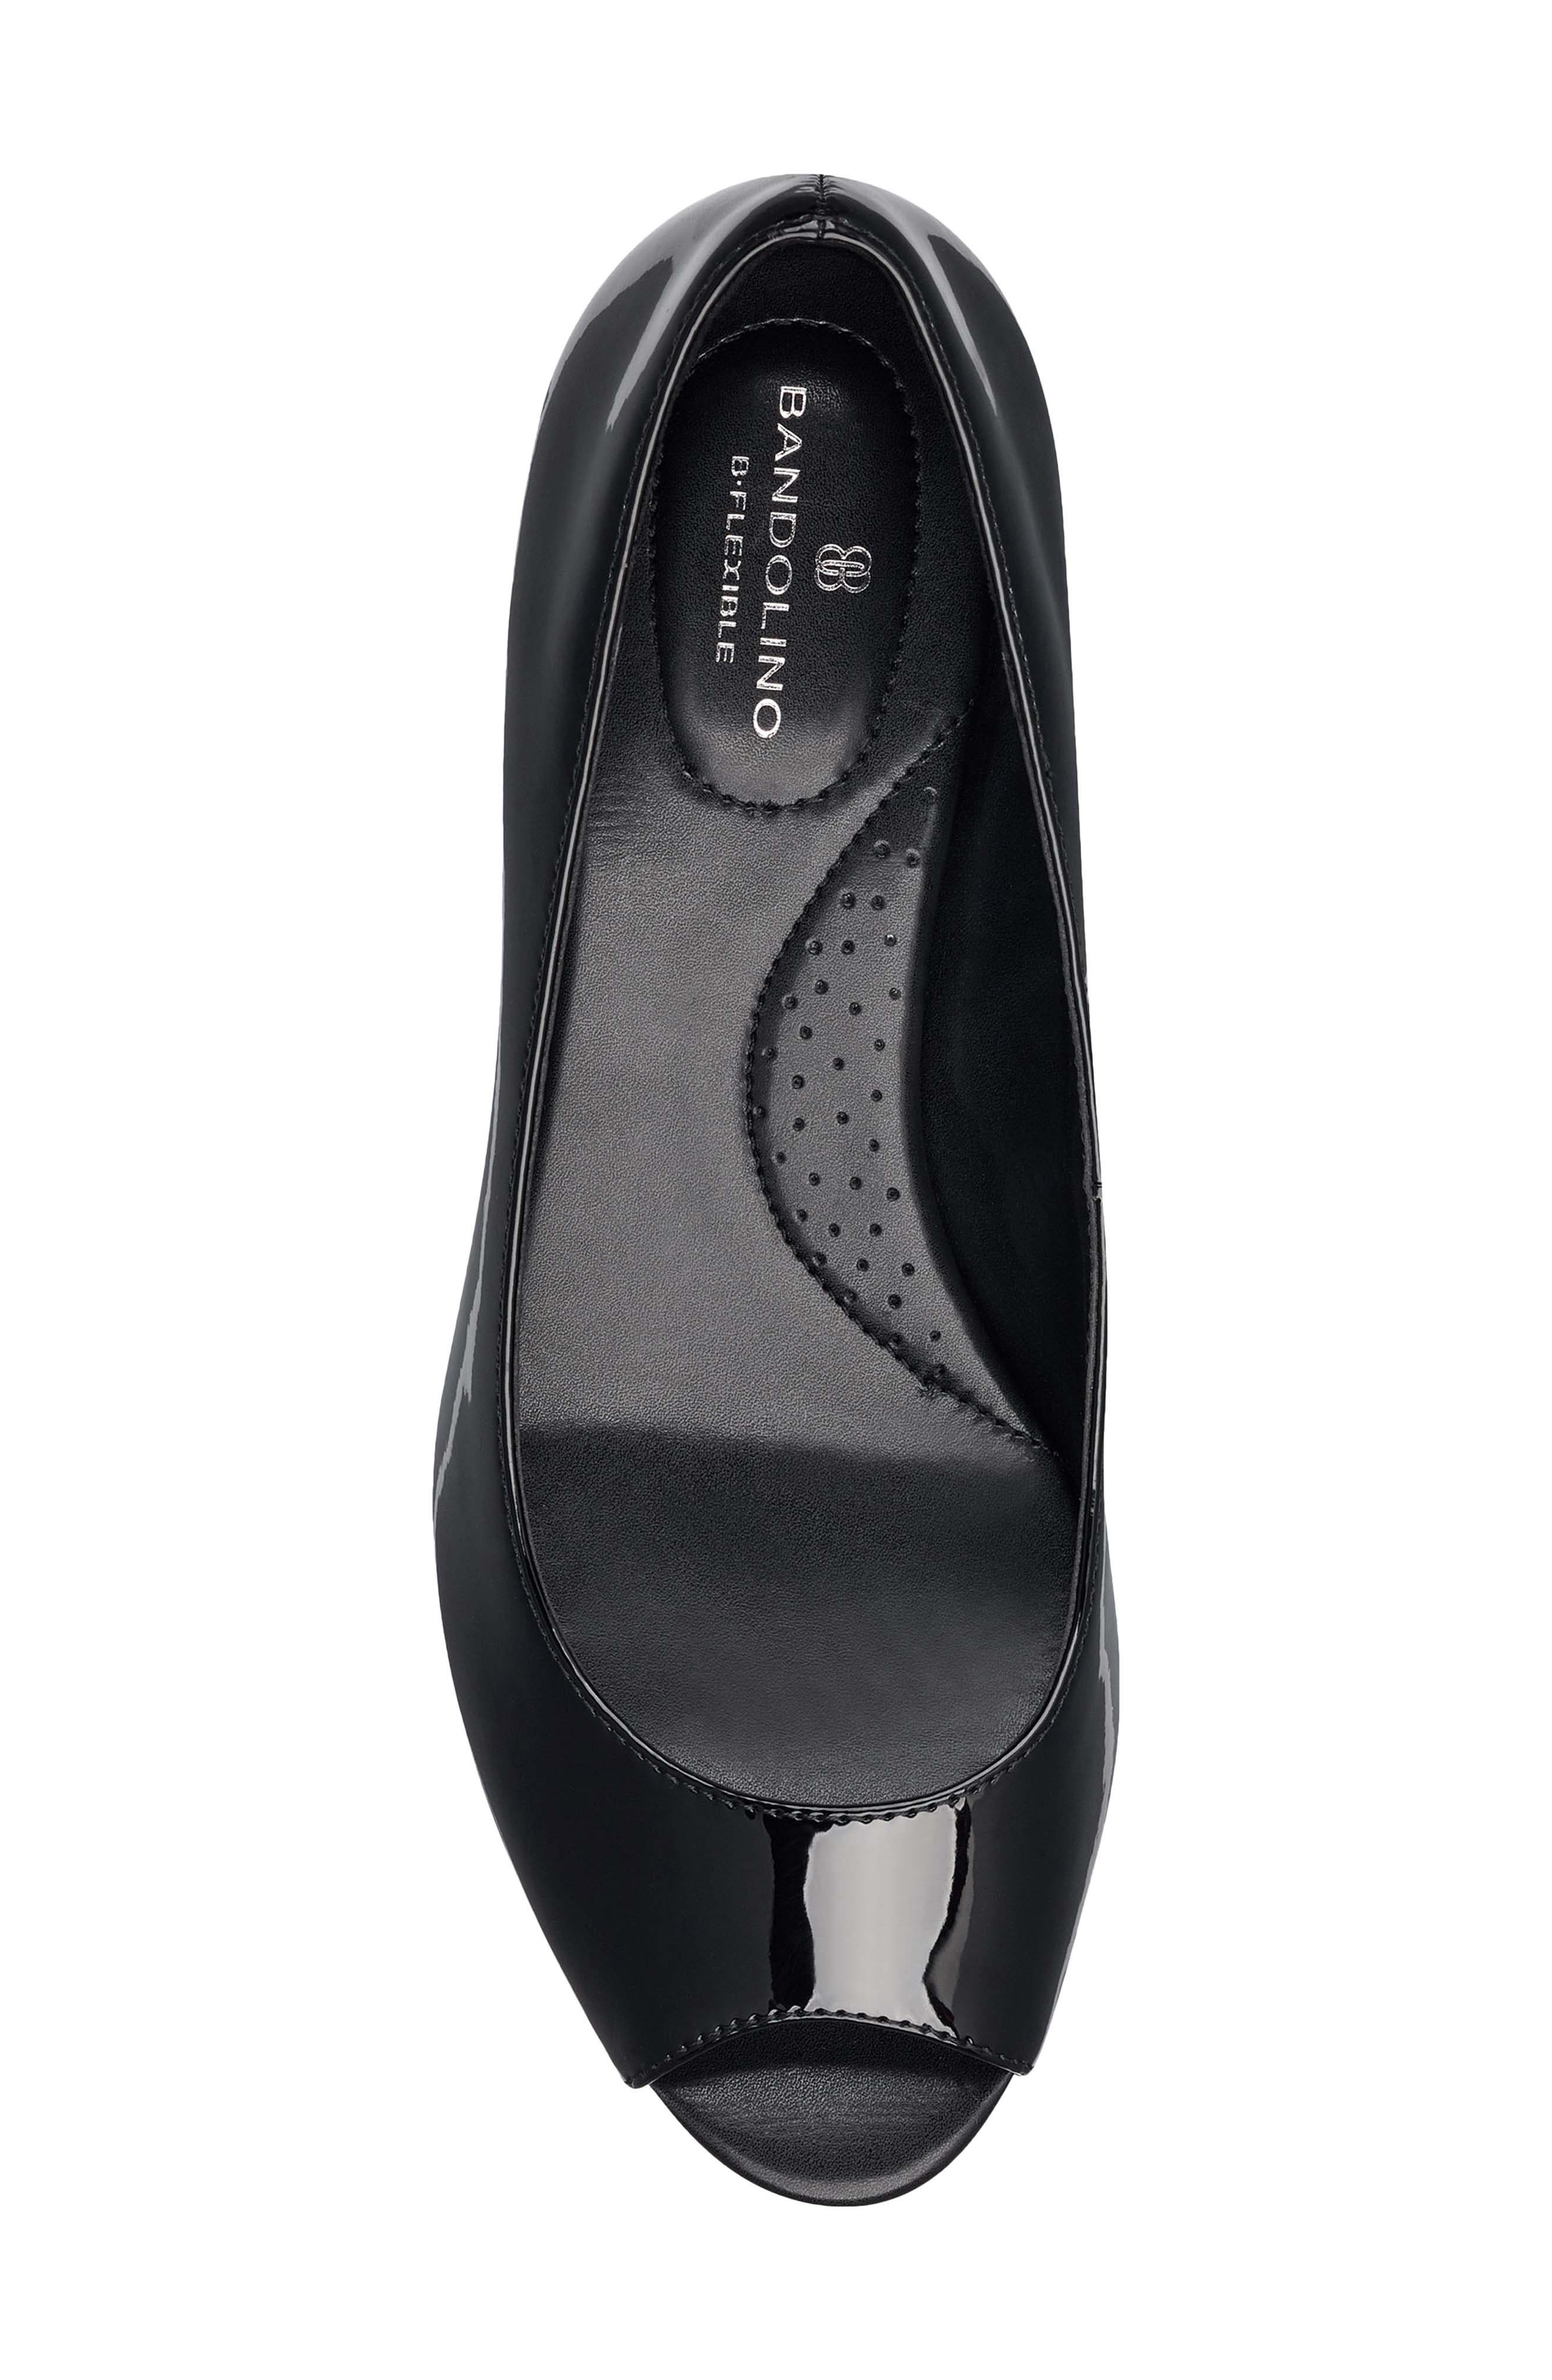 NEW Women's Patent Open Peep Toe  Low Wedge Heels Pump Sandal Shoes Size 5-10 